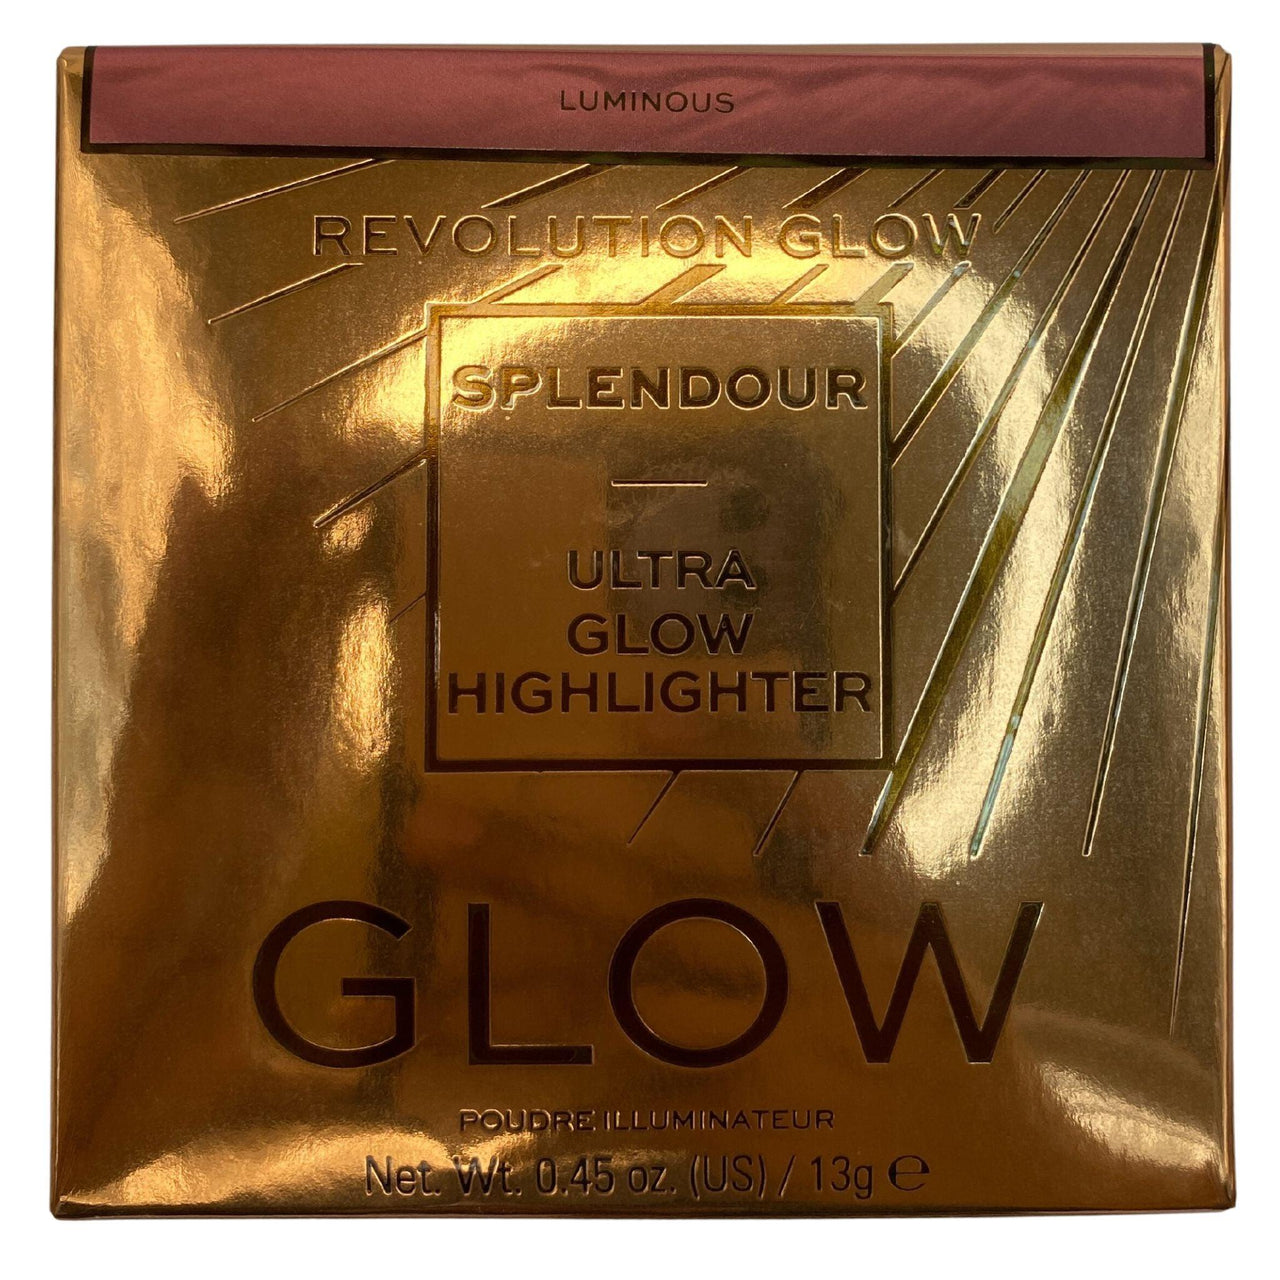 Luminous Revolution Glow Splendour Ultra Glow Highlighter ( 72 Pcs Box ) - Discount Wholesalers Inc